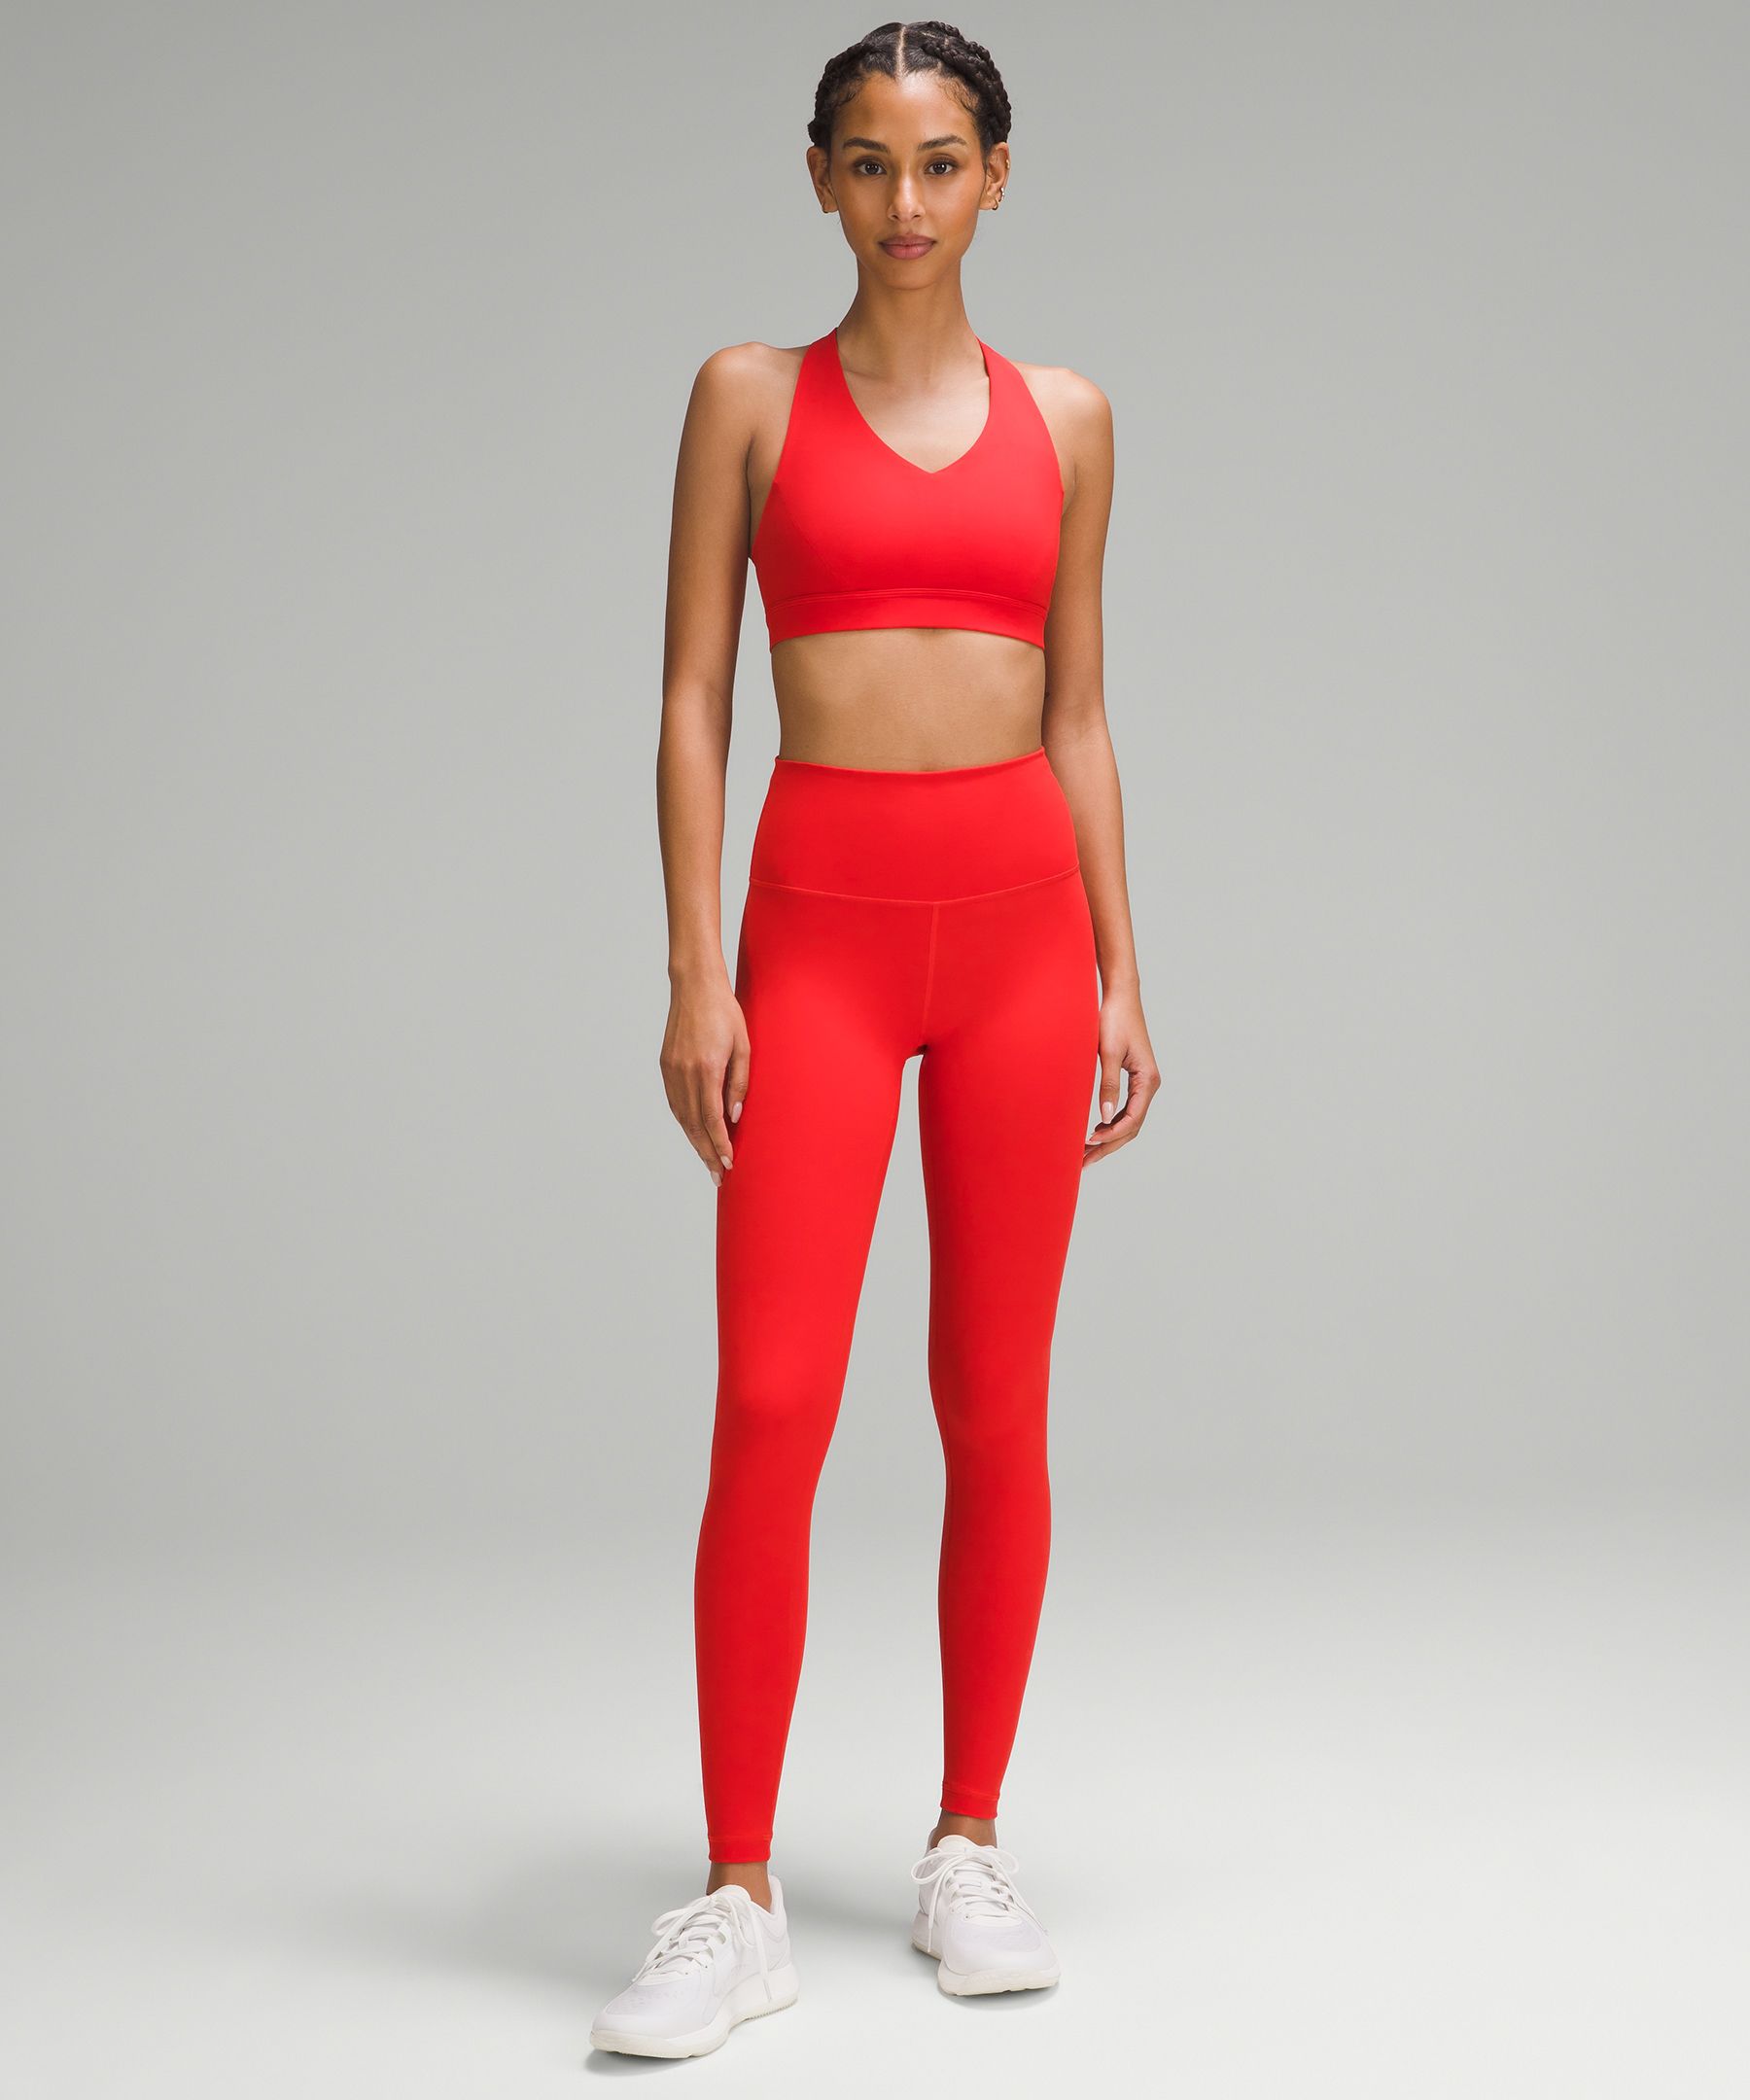 Lululemon Align Crop Deep Rouge Burgundy Red Yoga Fitness Woman’s Size 10